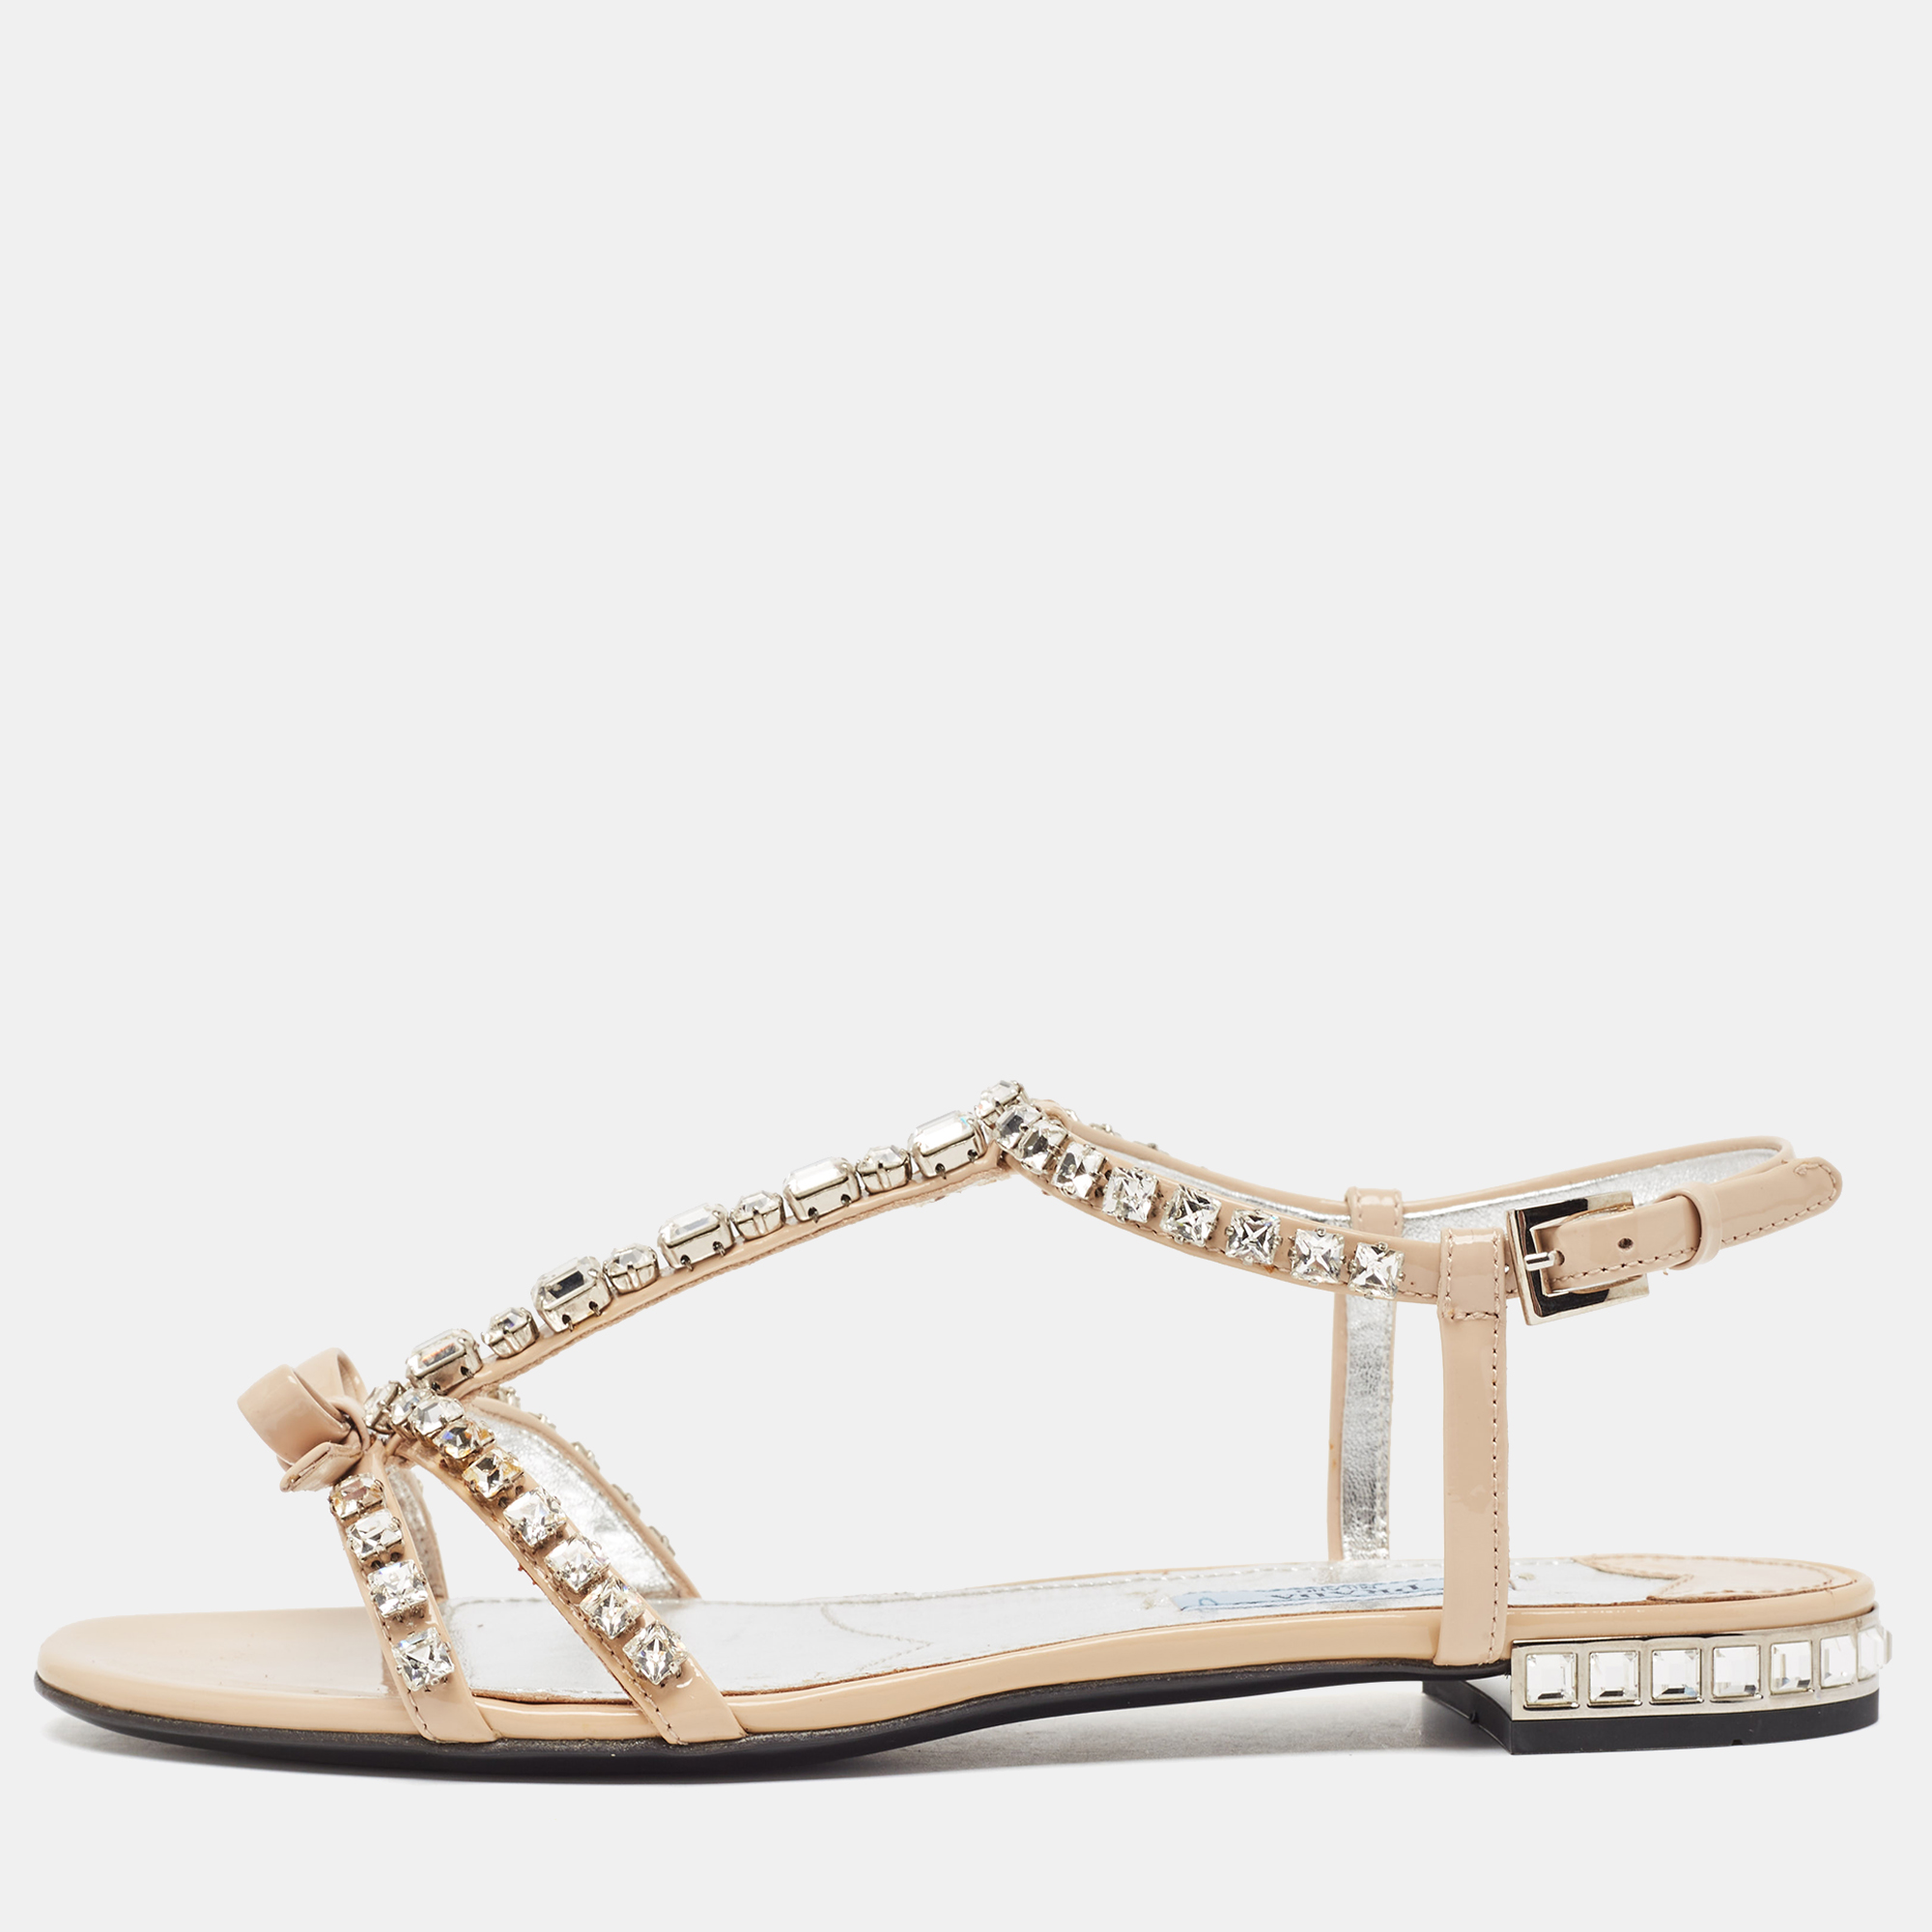 Prada beige patent leather crystal embellished bow ankle strap sandals size 36.5